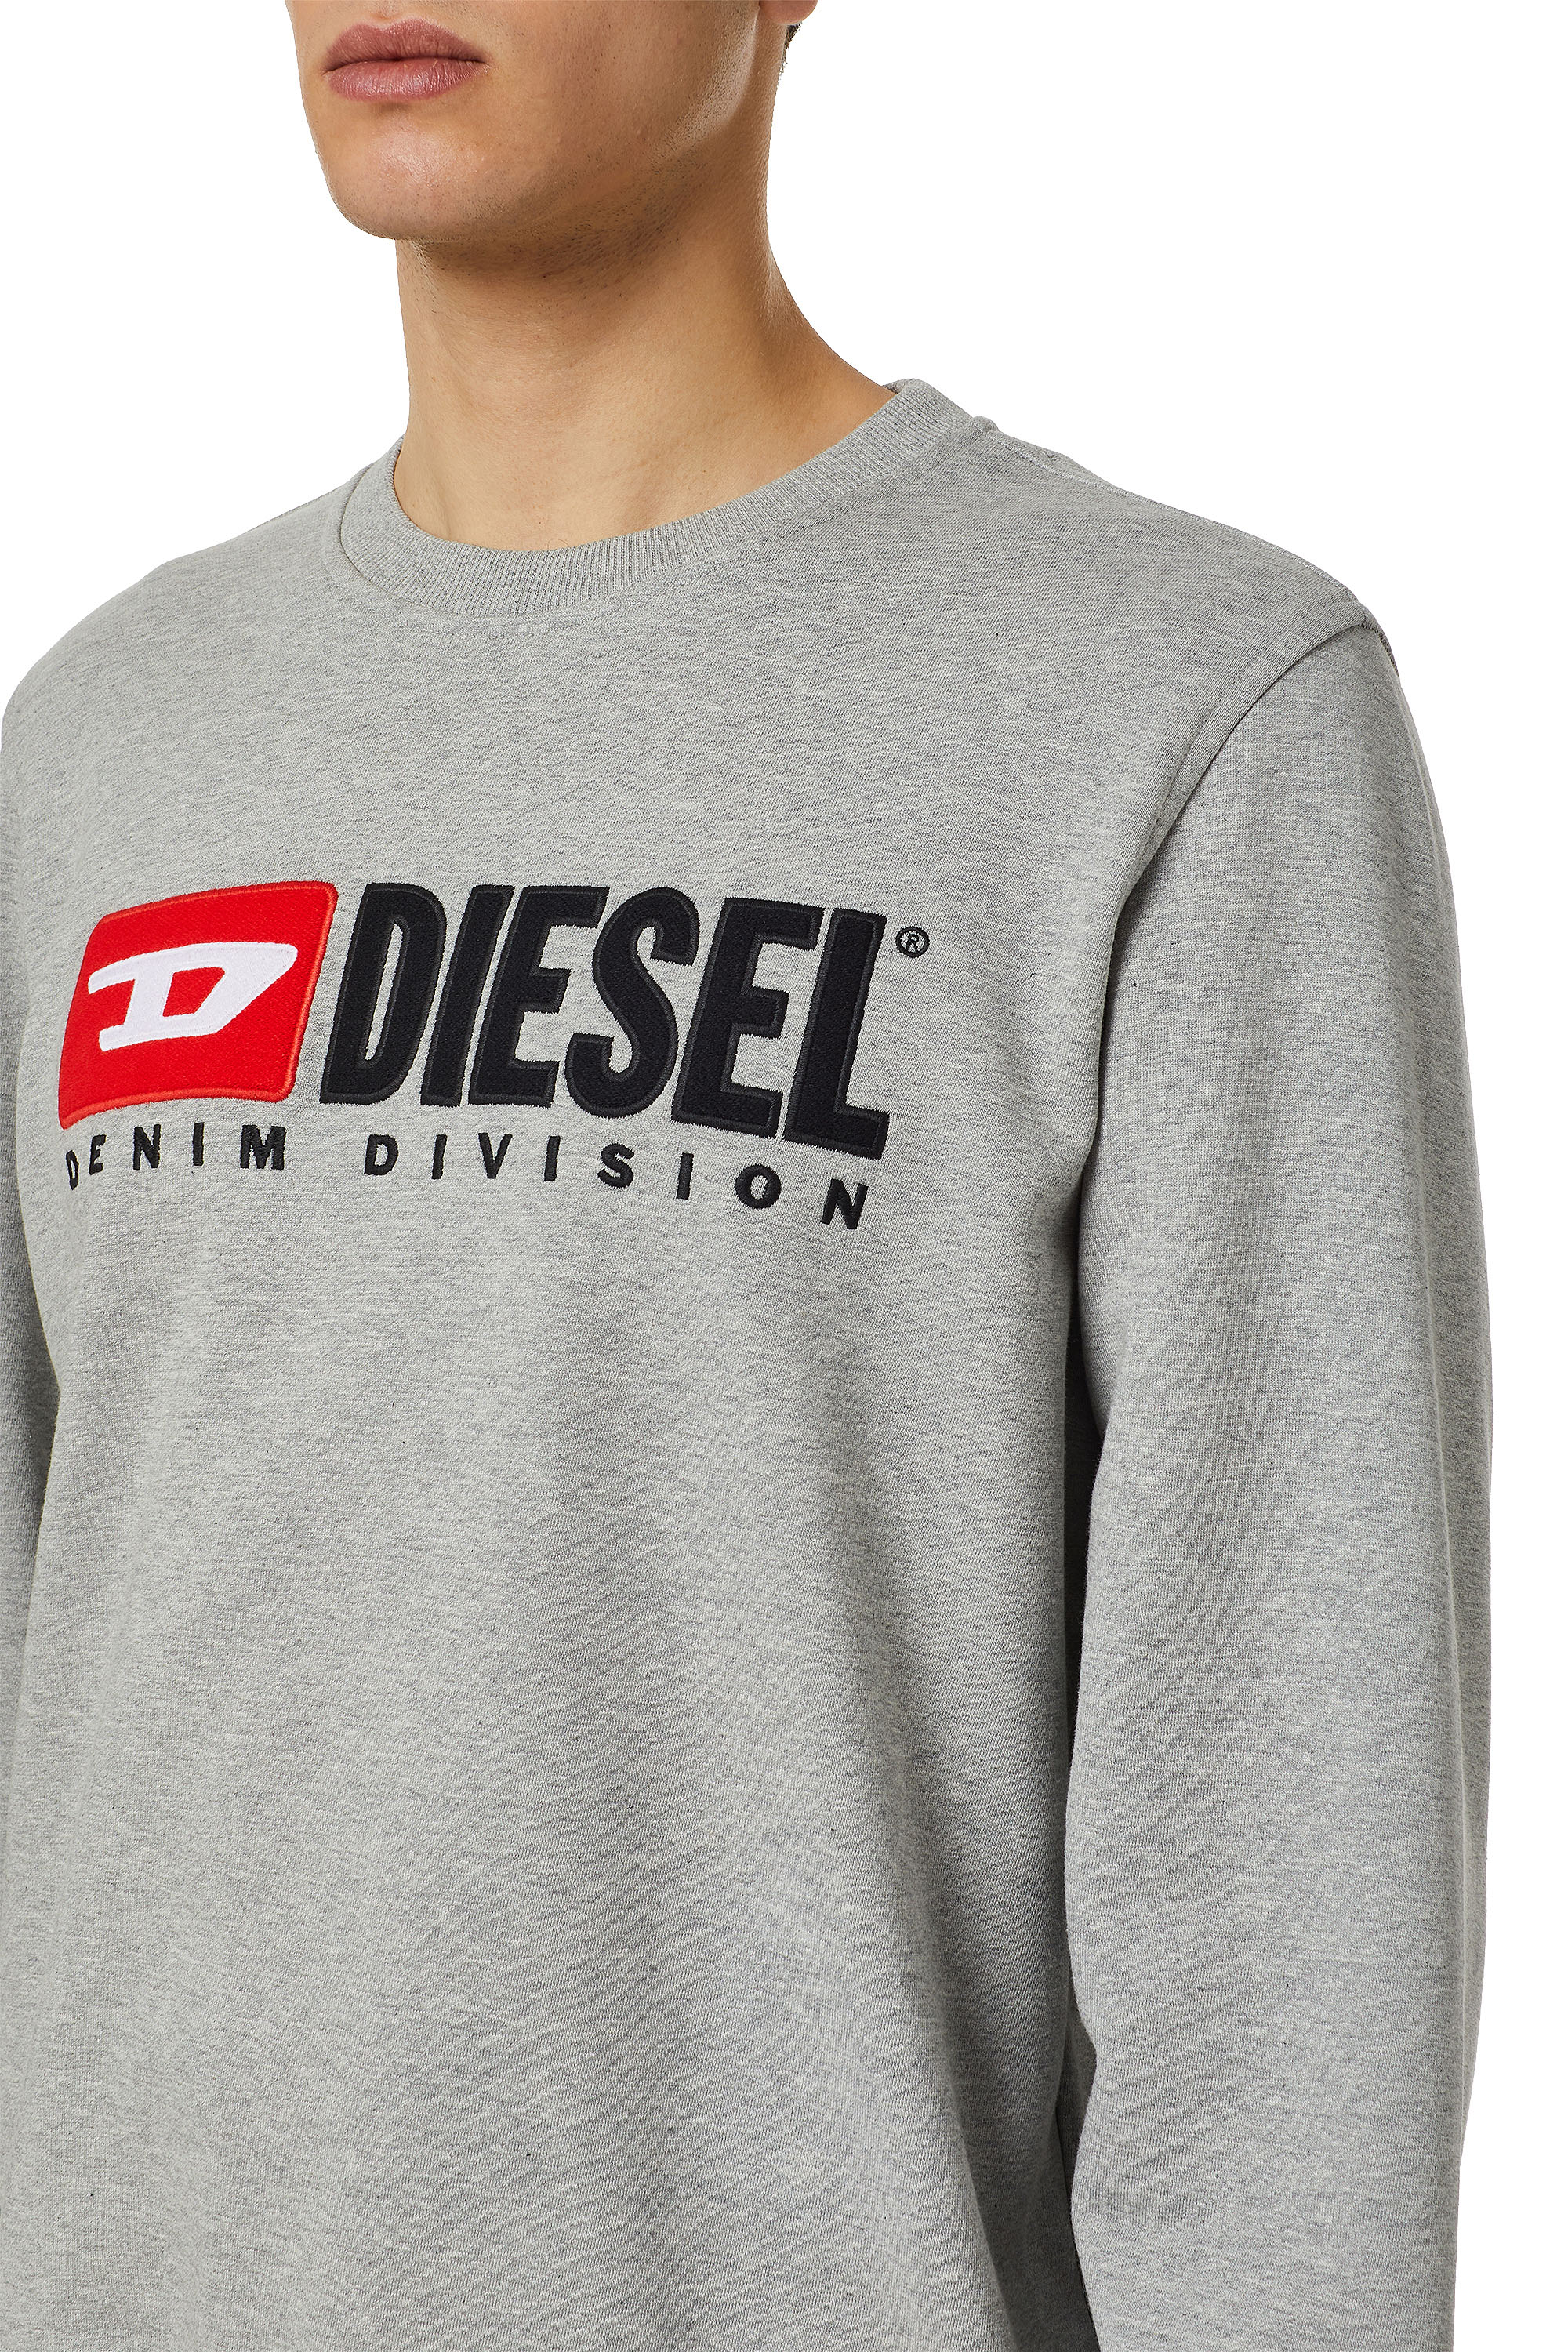 Diesel - S-GINN-DIV, Gris - Image 4